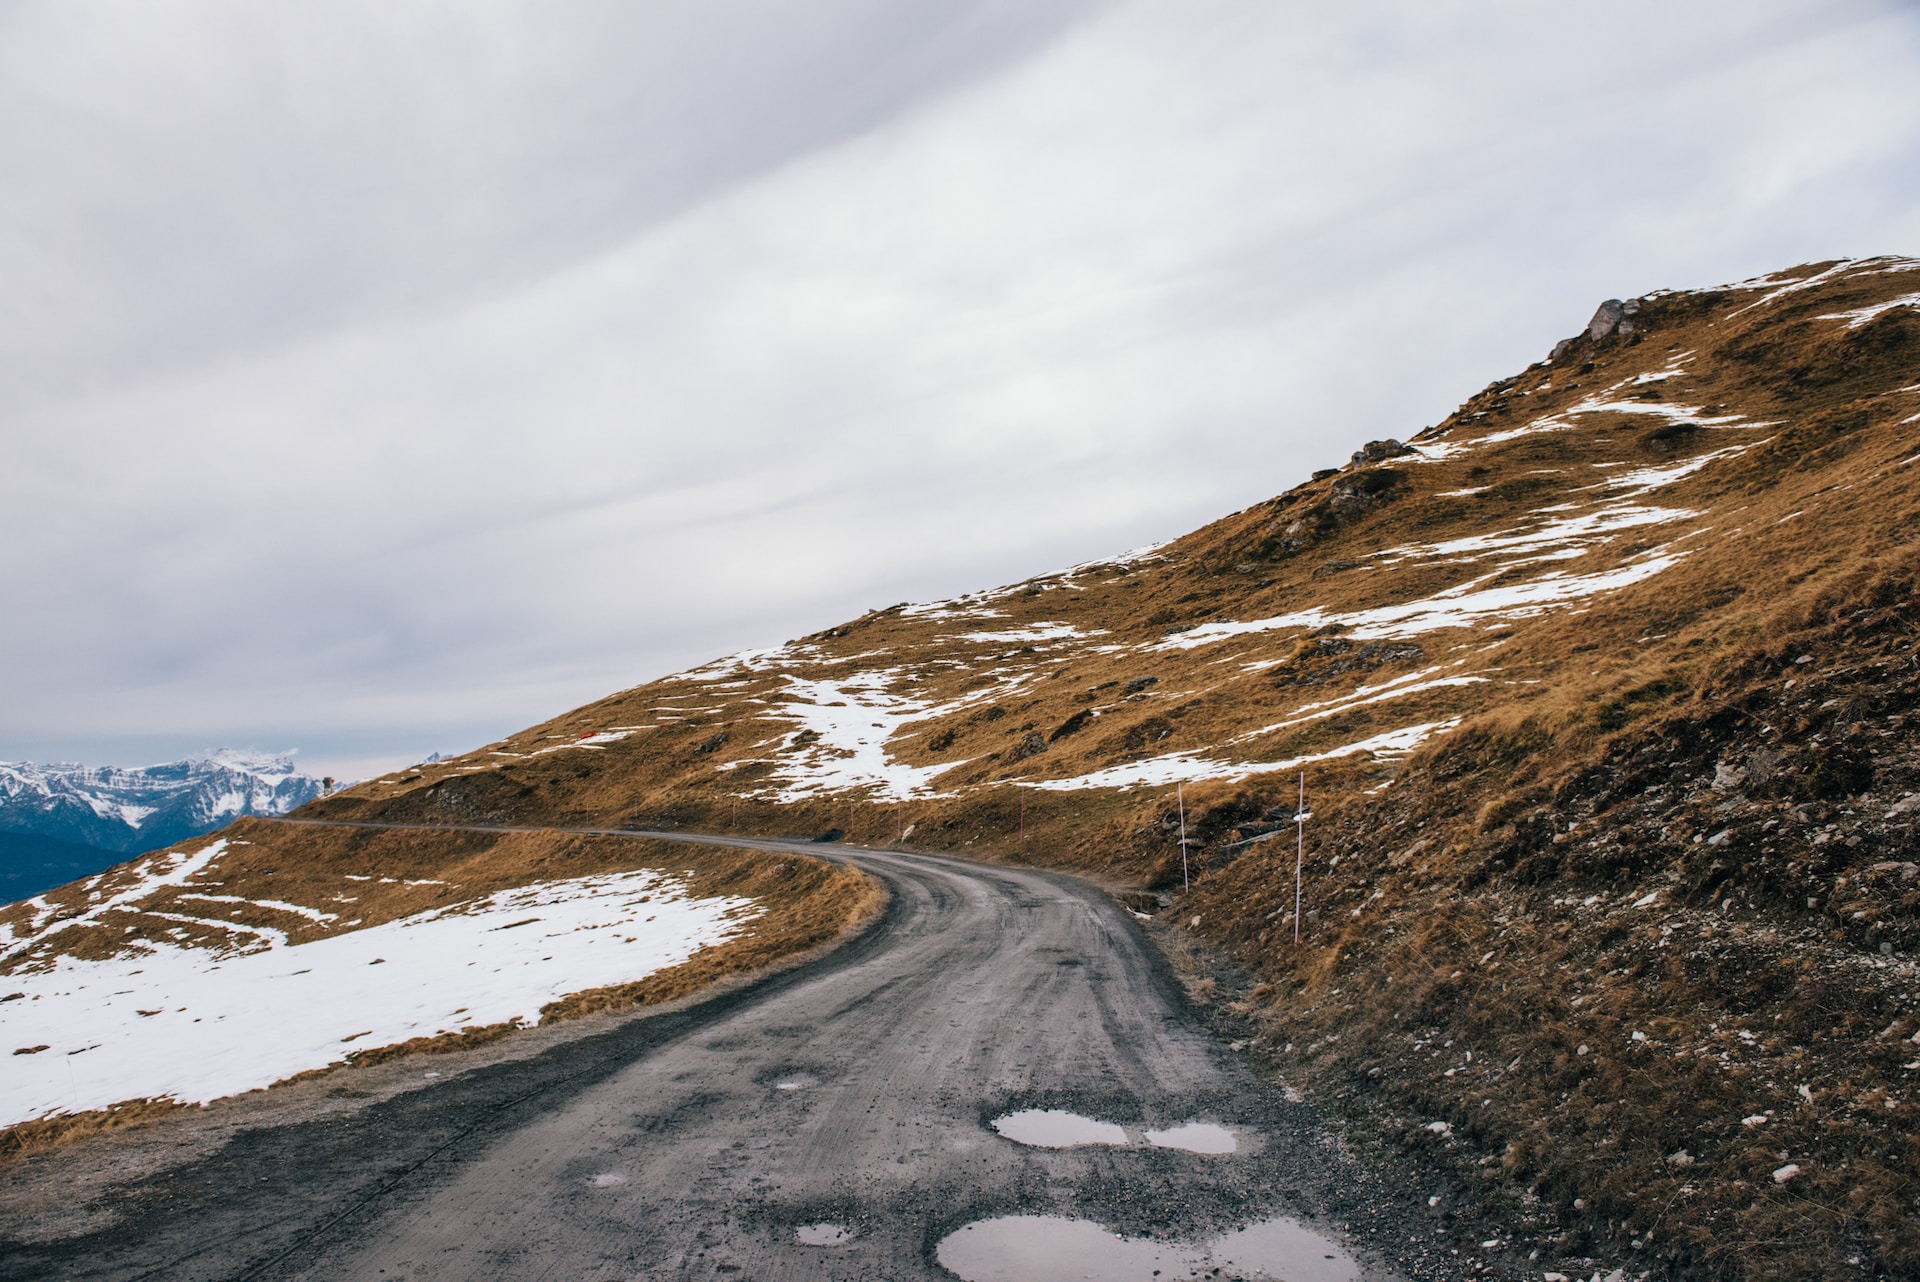 A defective mountainous road